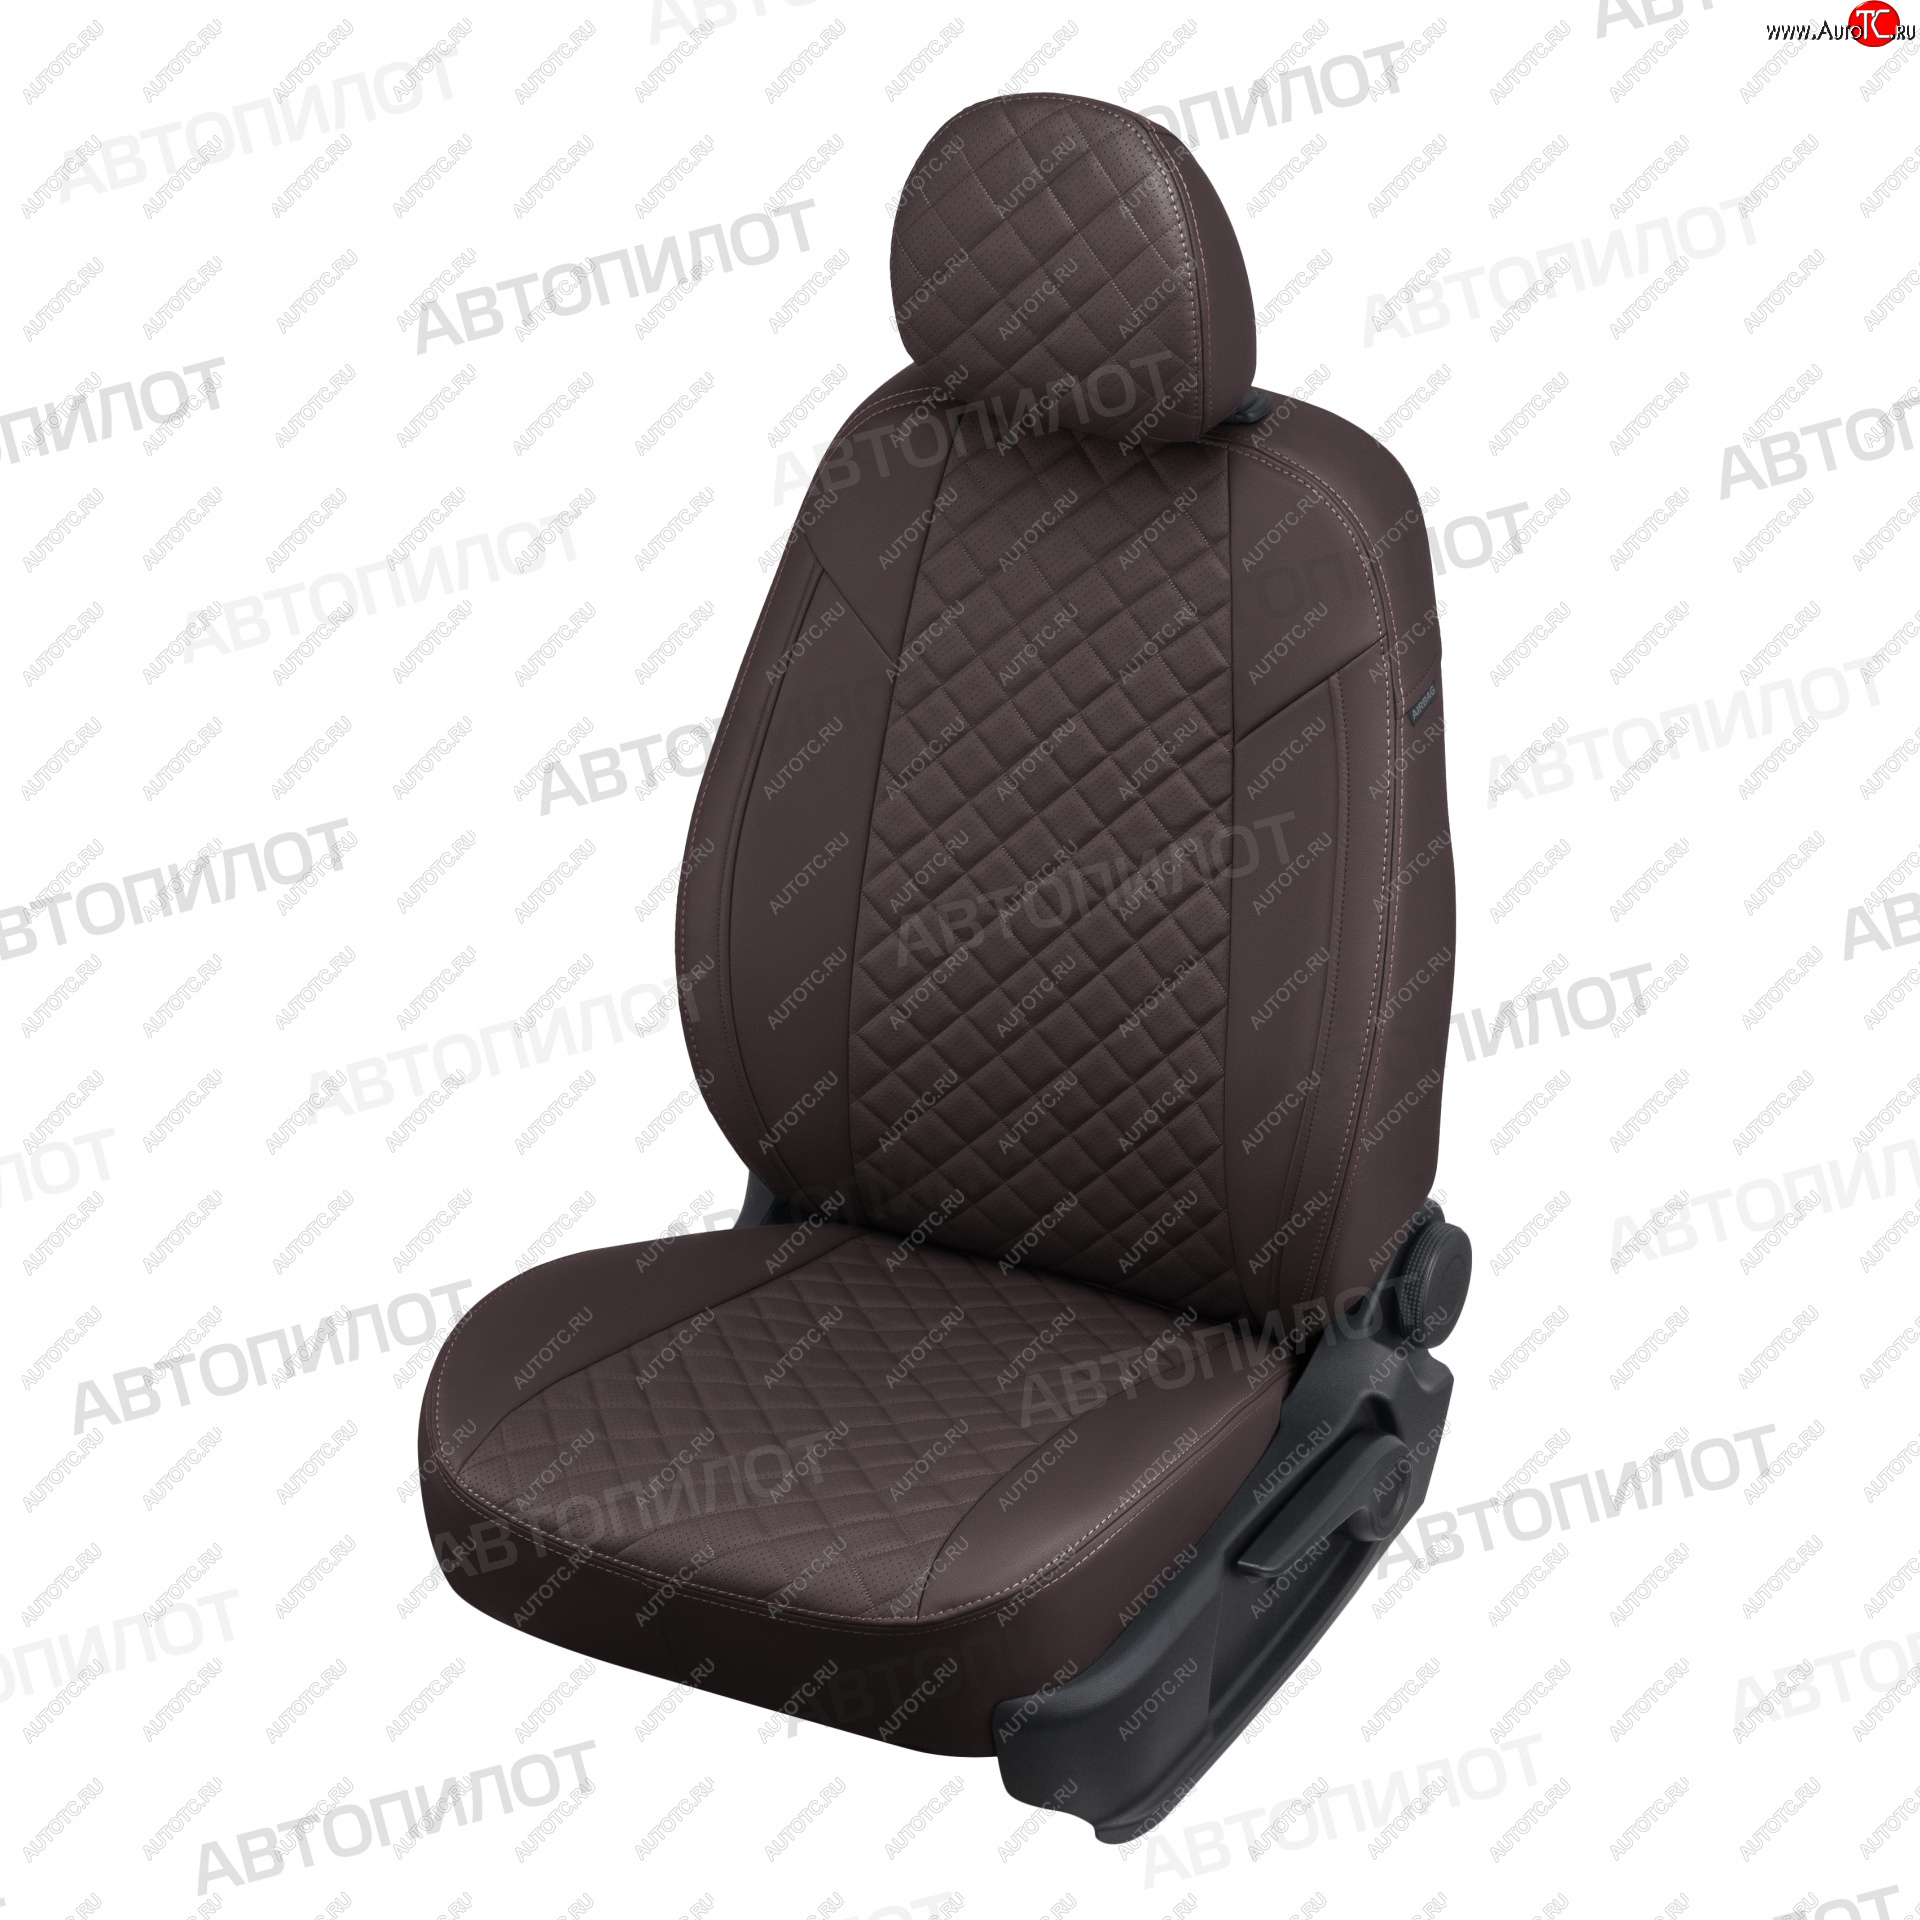 13 999 р. Чехлы сидений (экокожа) Автопилот Ромб  KIA Picanto  1 SA хэтчбэк 5 дв. (2003-2011) (шоколад)